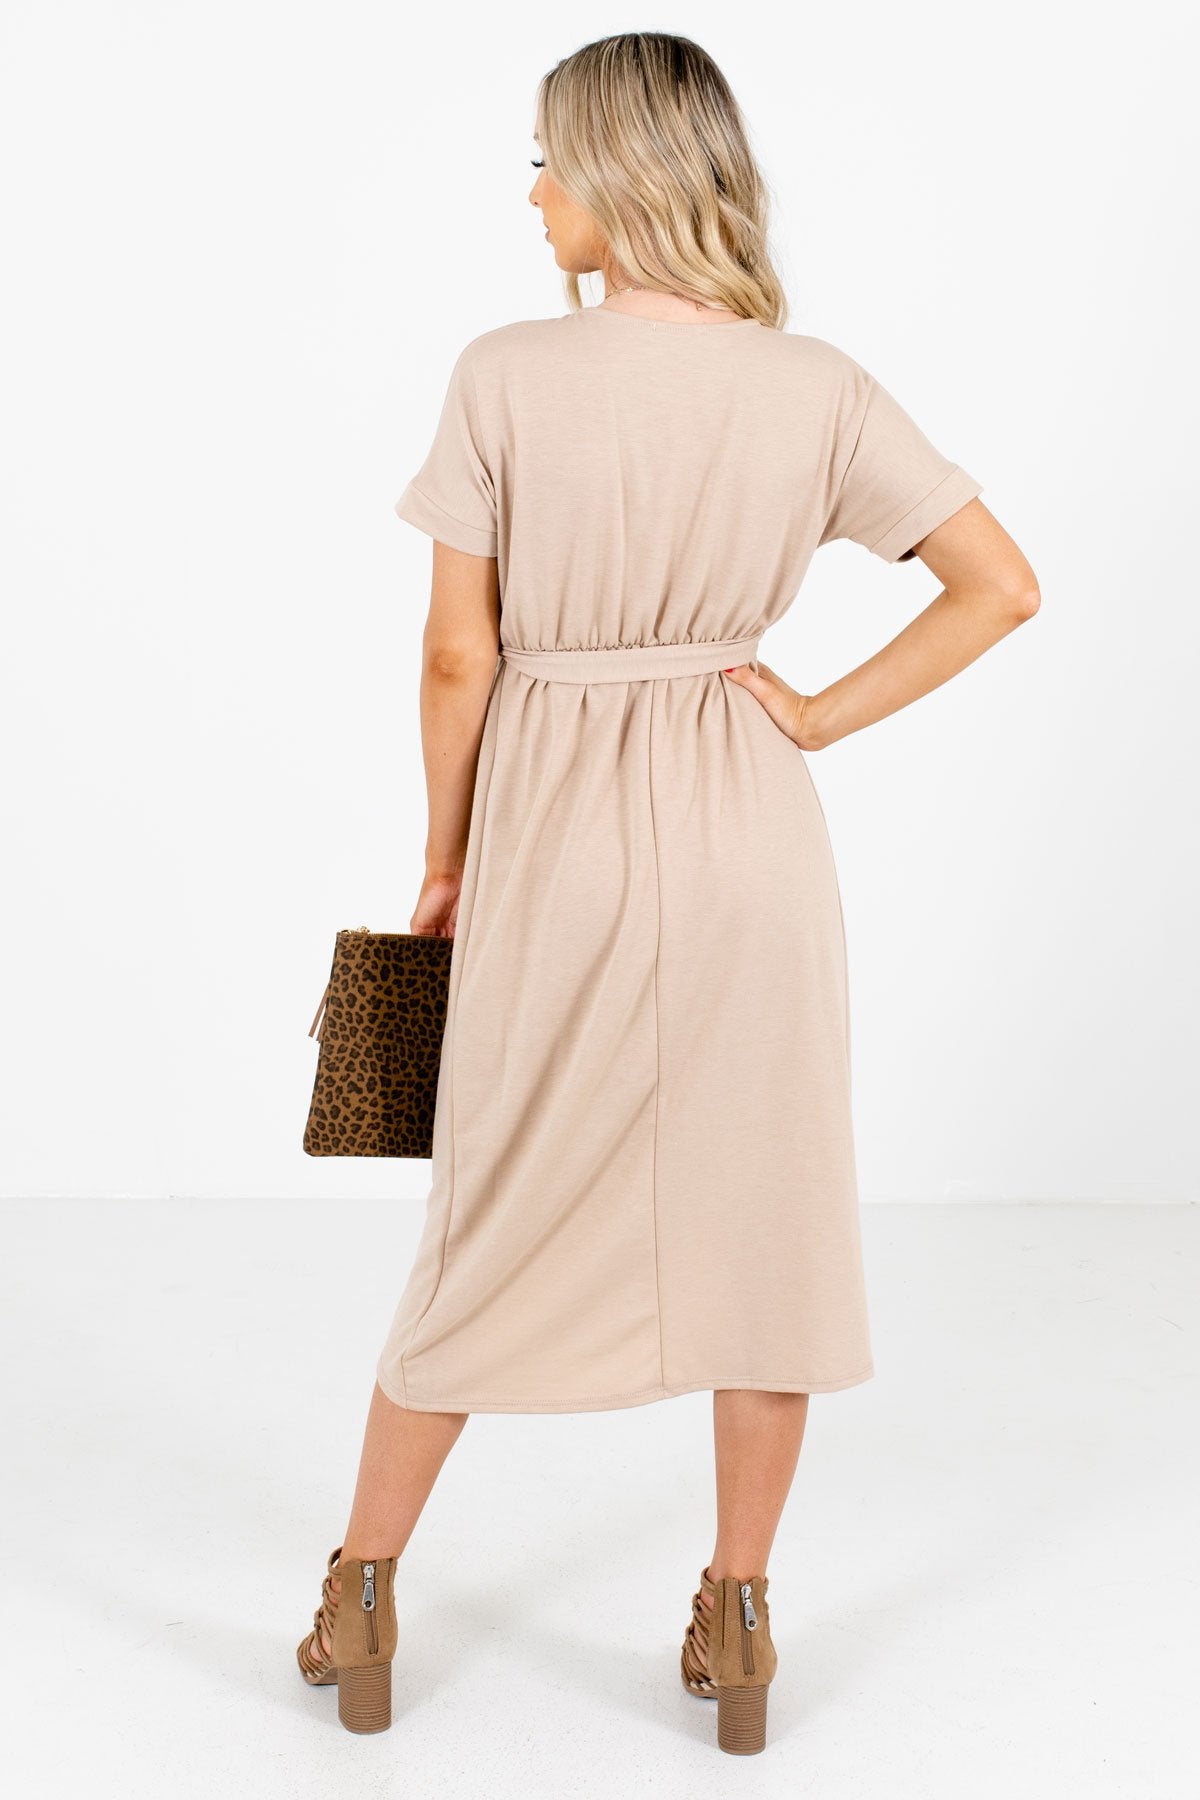 Women's Brown Elastic Waistband Boutique Knee-Length Dress